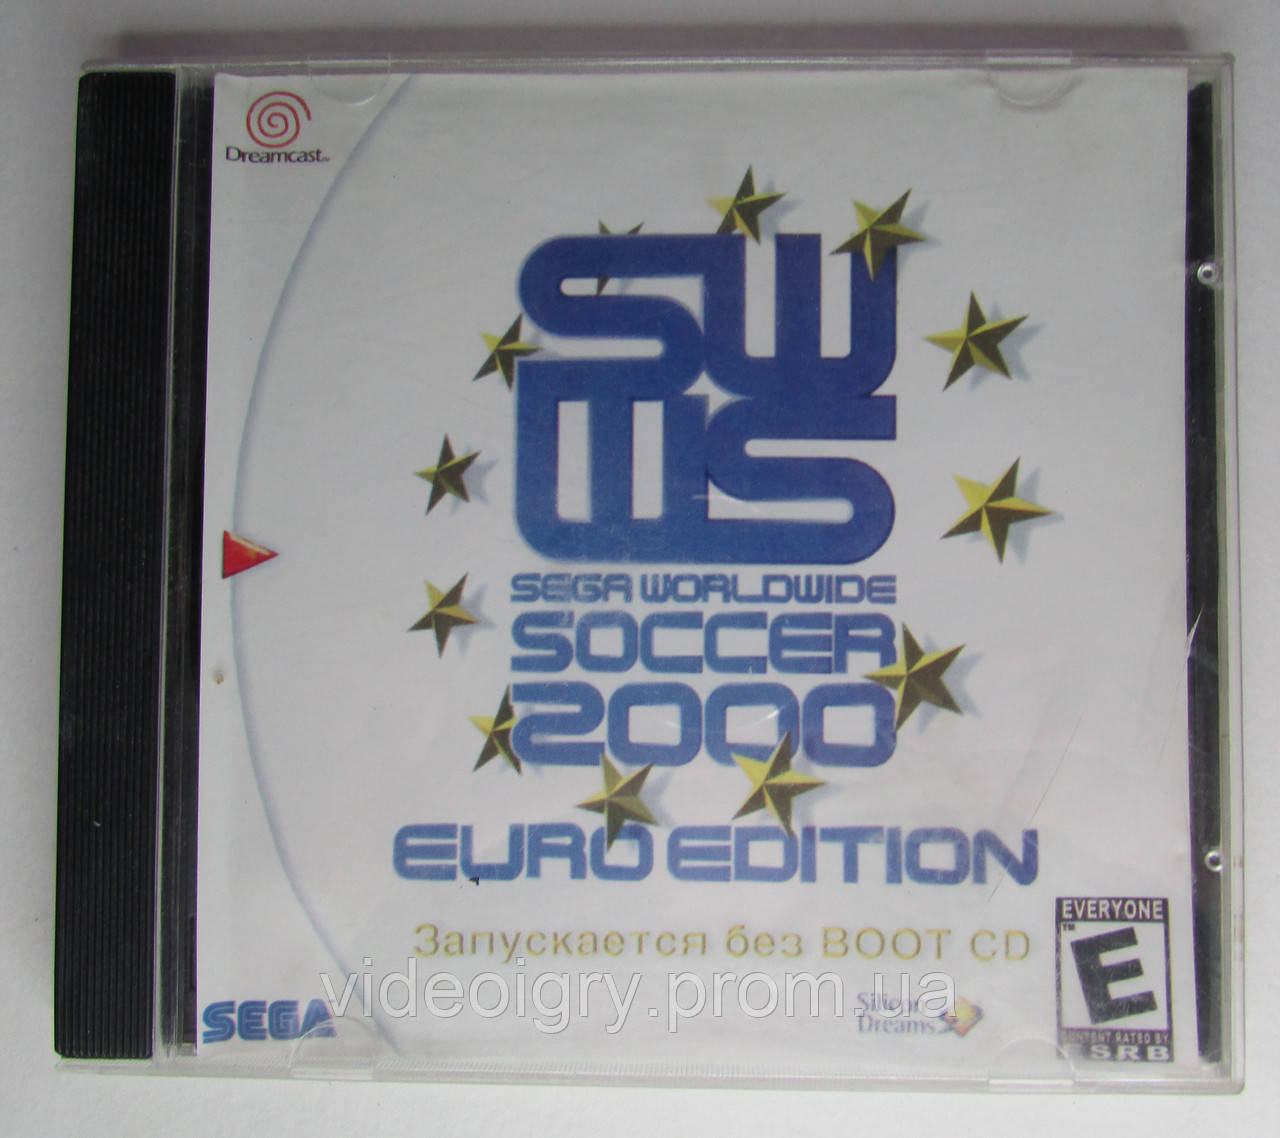 Sega Worldwide Soccer 2000 Euro Edition Sega Dreamcast